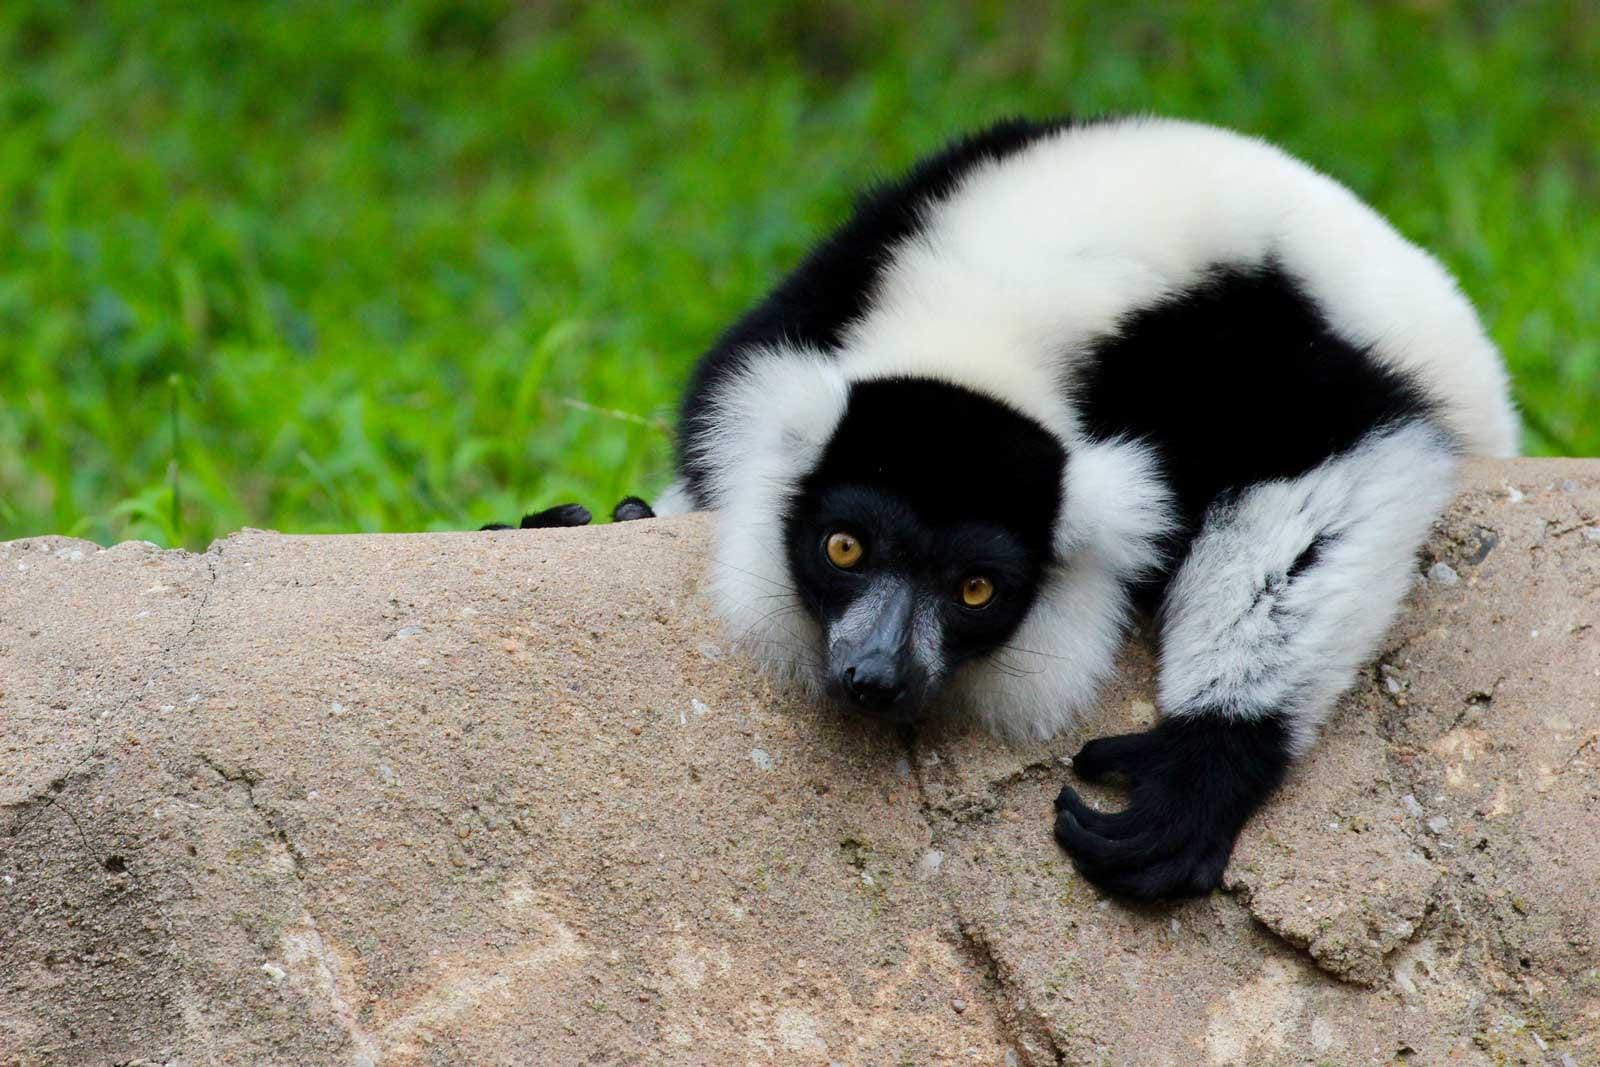 Black & White Ruffed Lemur